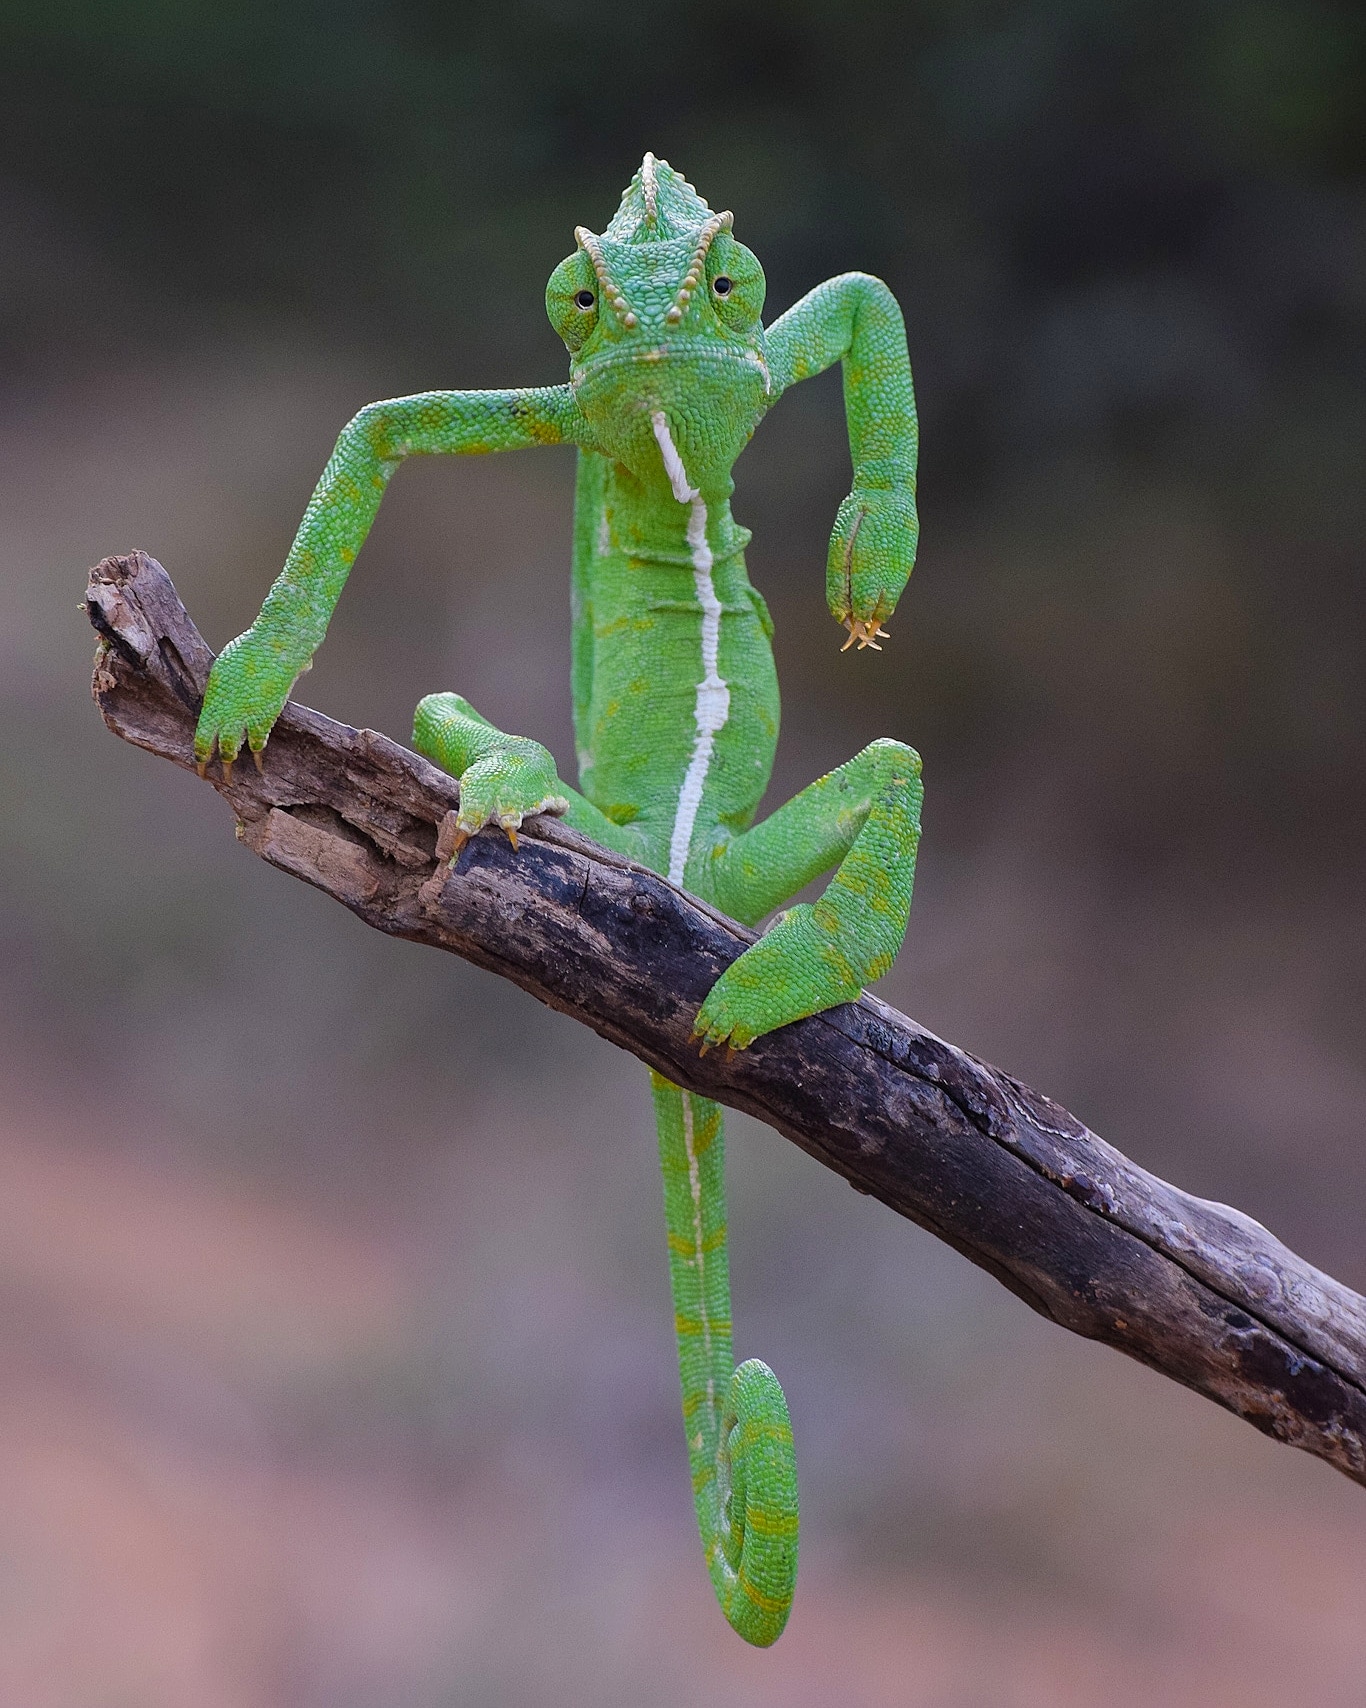 Chameleon with arm raised